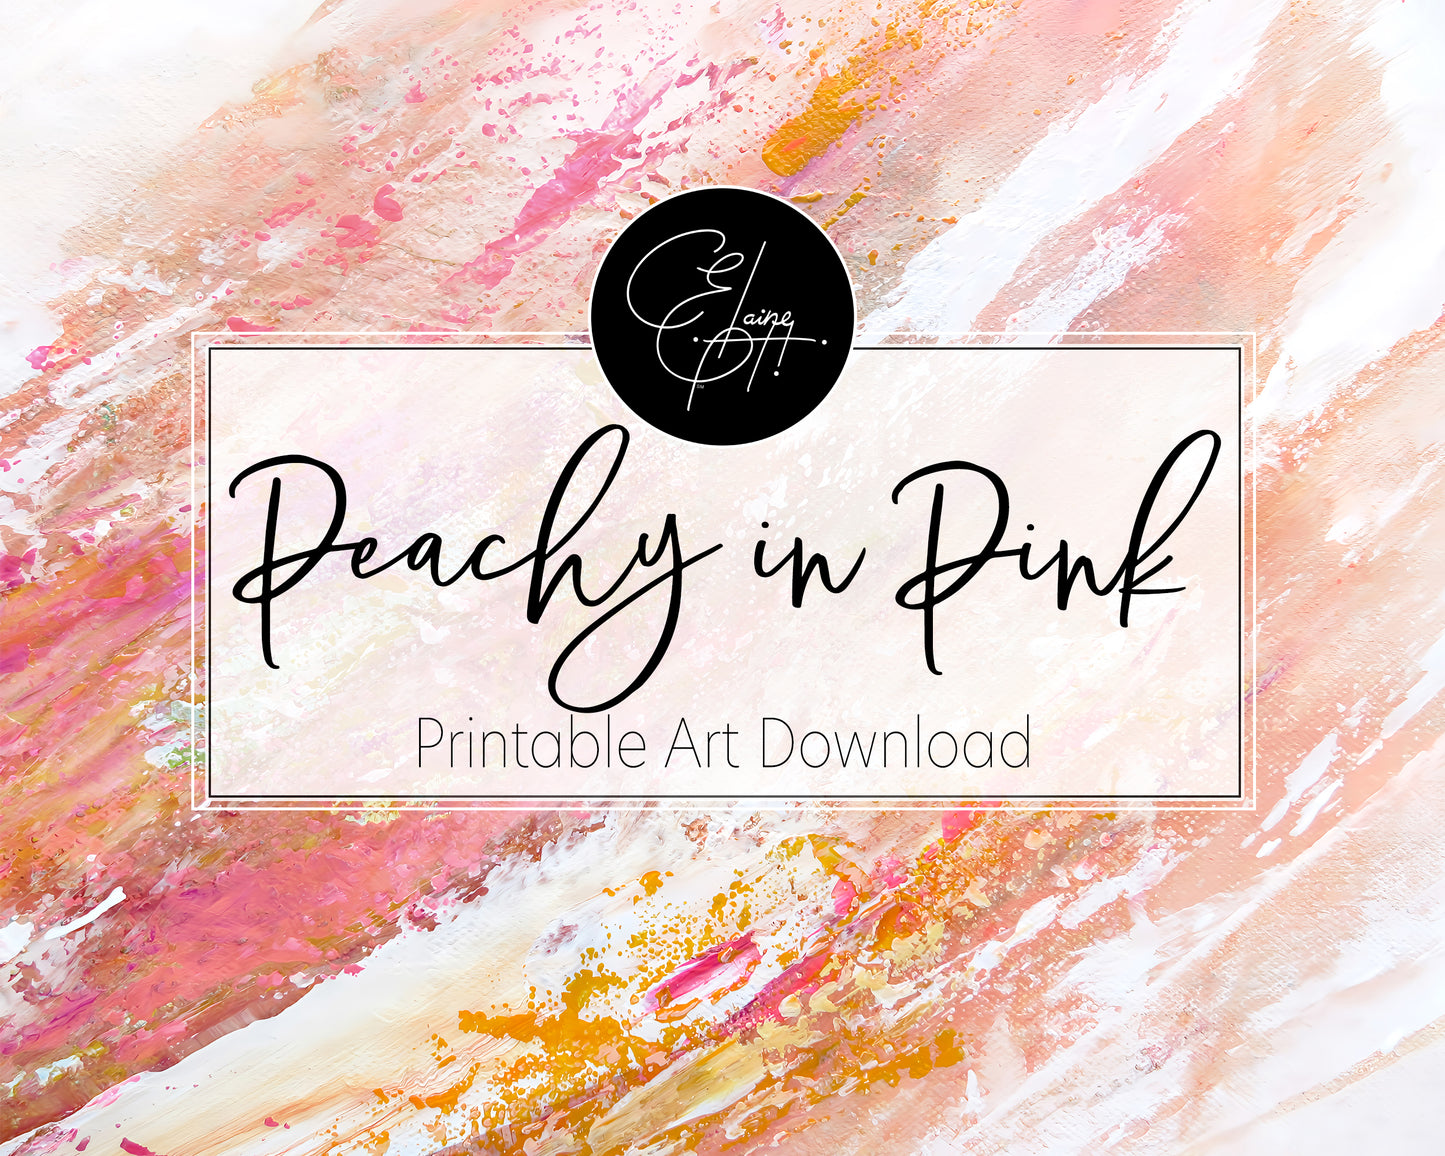 Peachy in Pink - Printable Wall Art